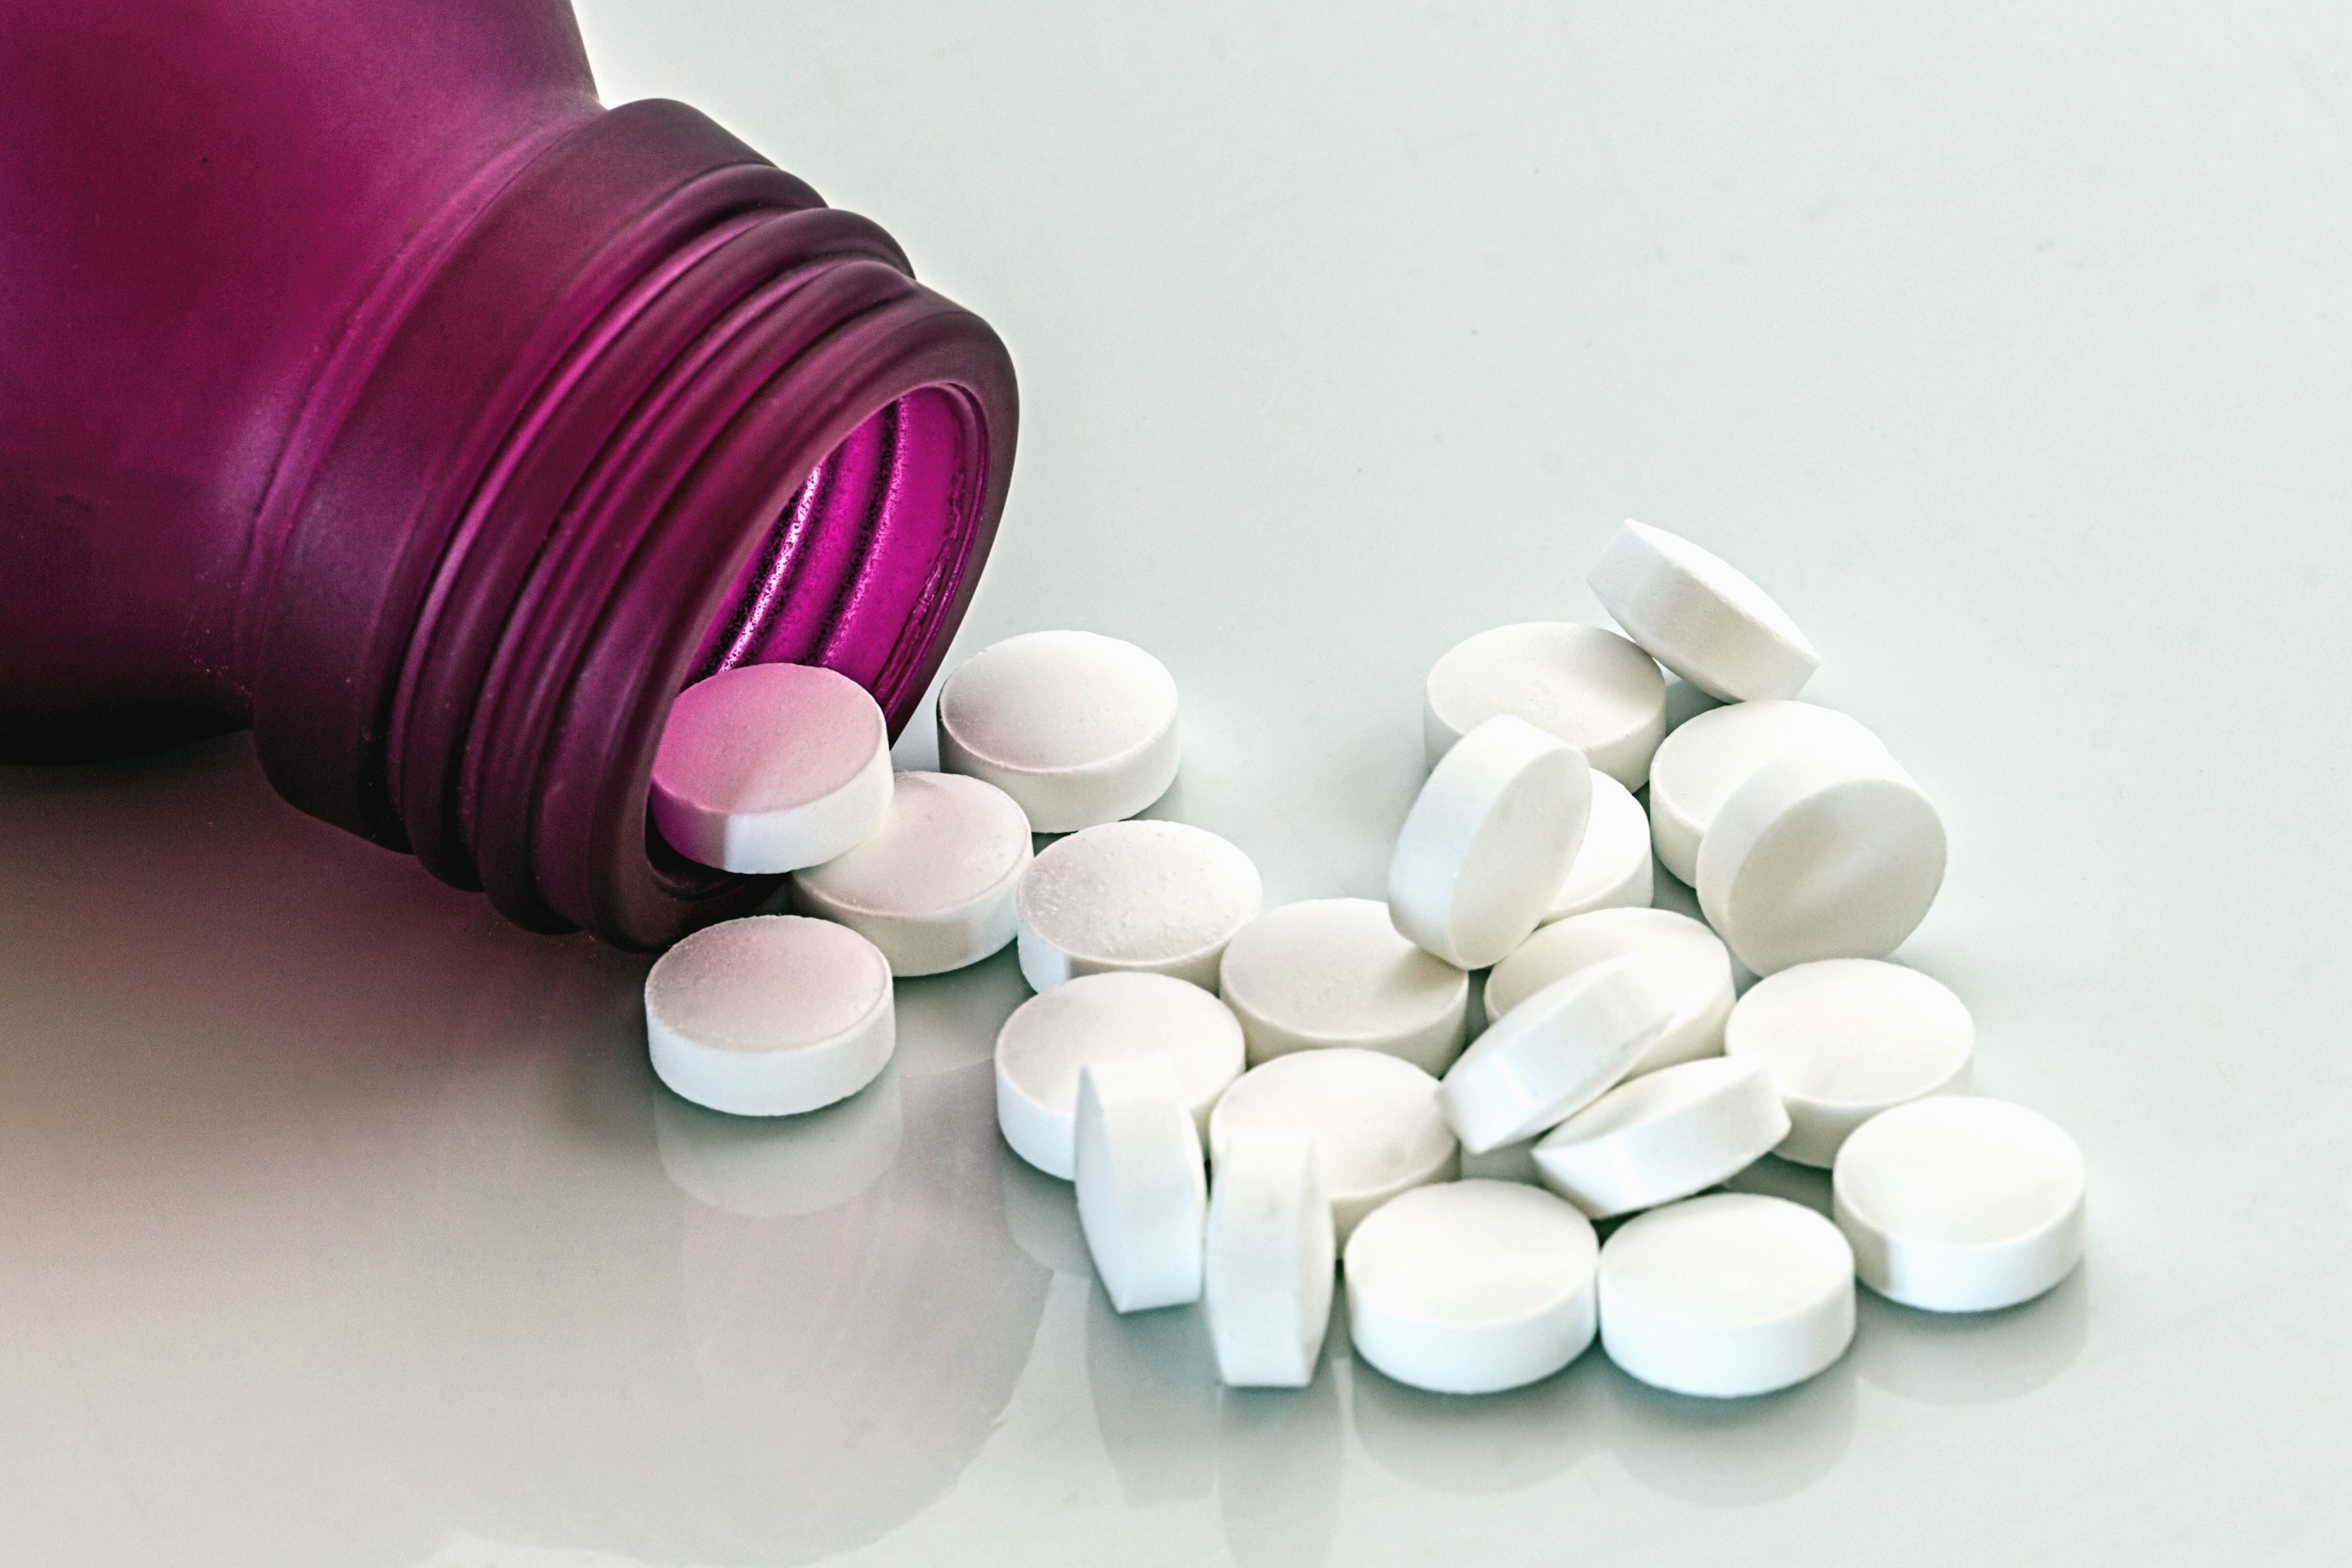 prescription pilule contraceptive pharmacien